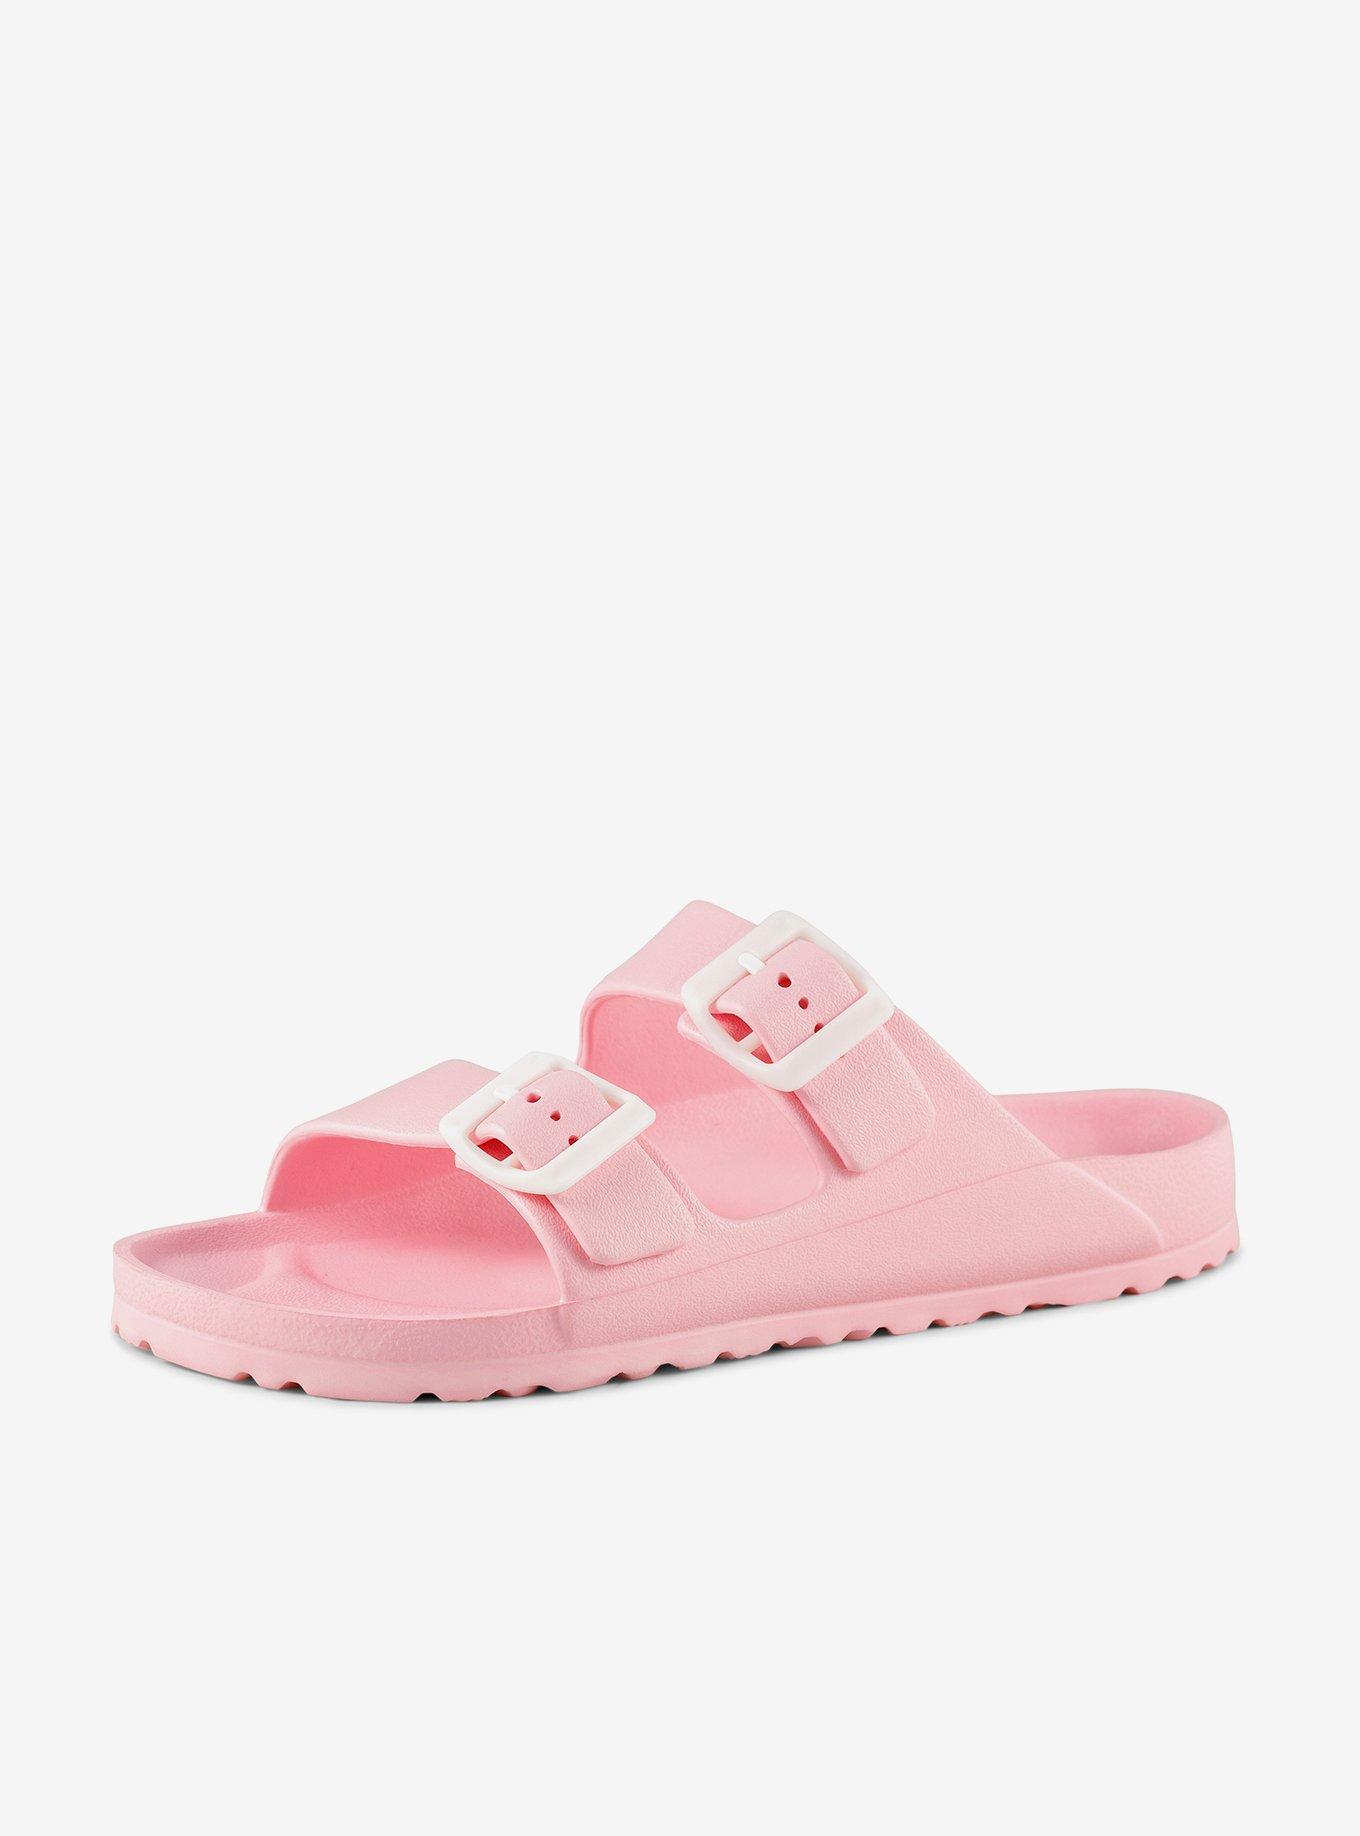 Soho Womens Sandal Pink